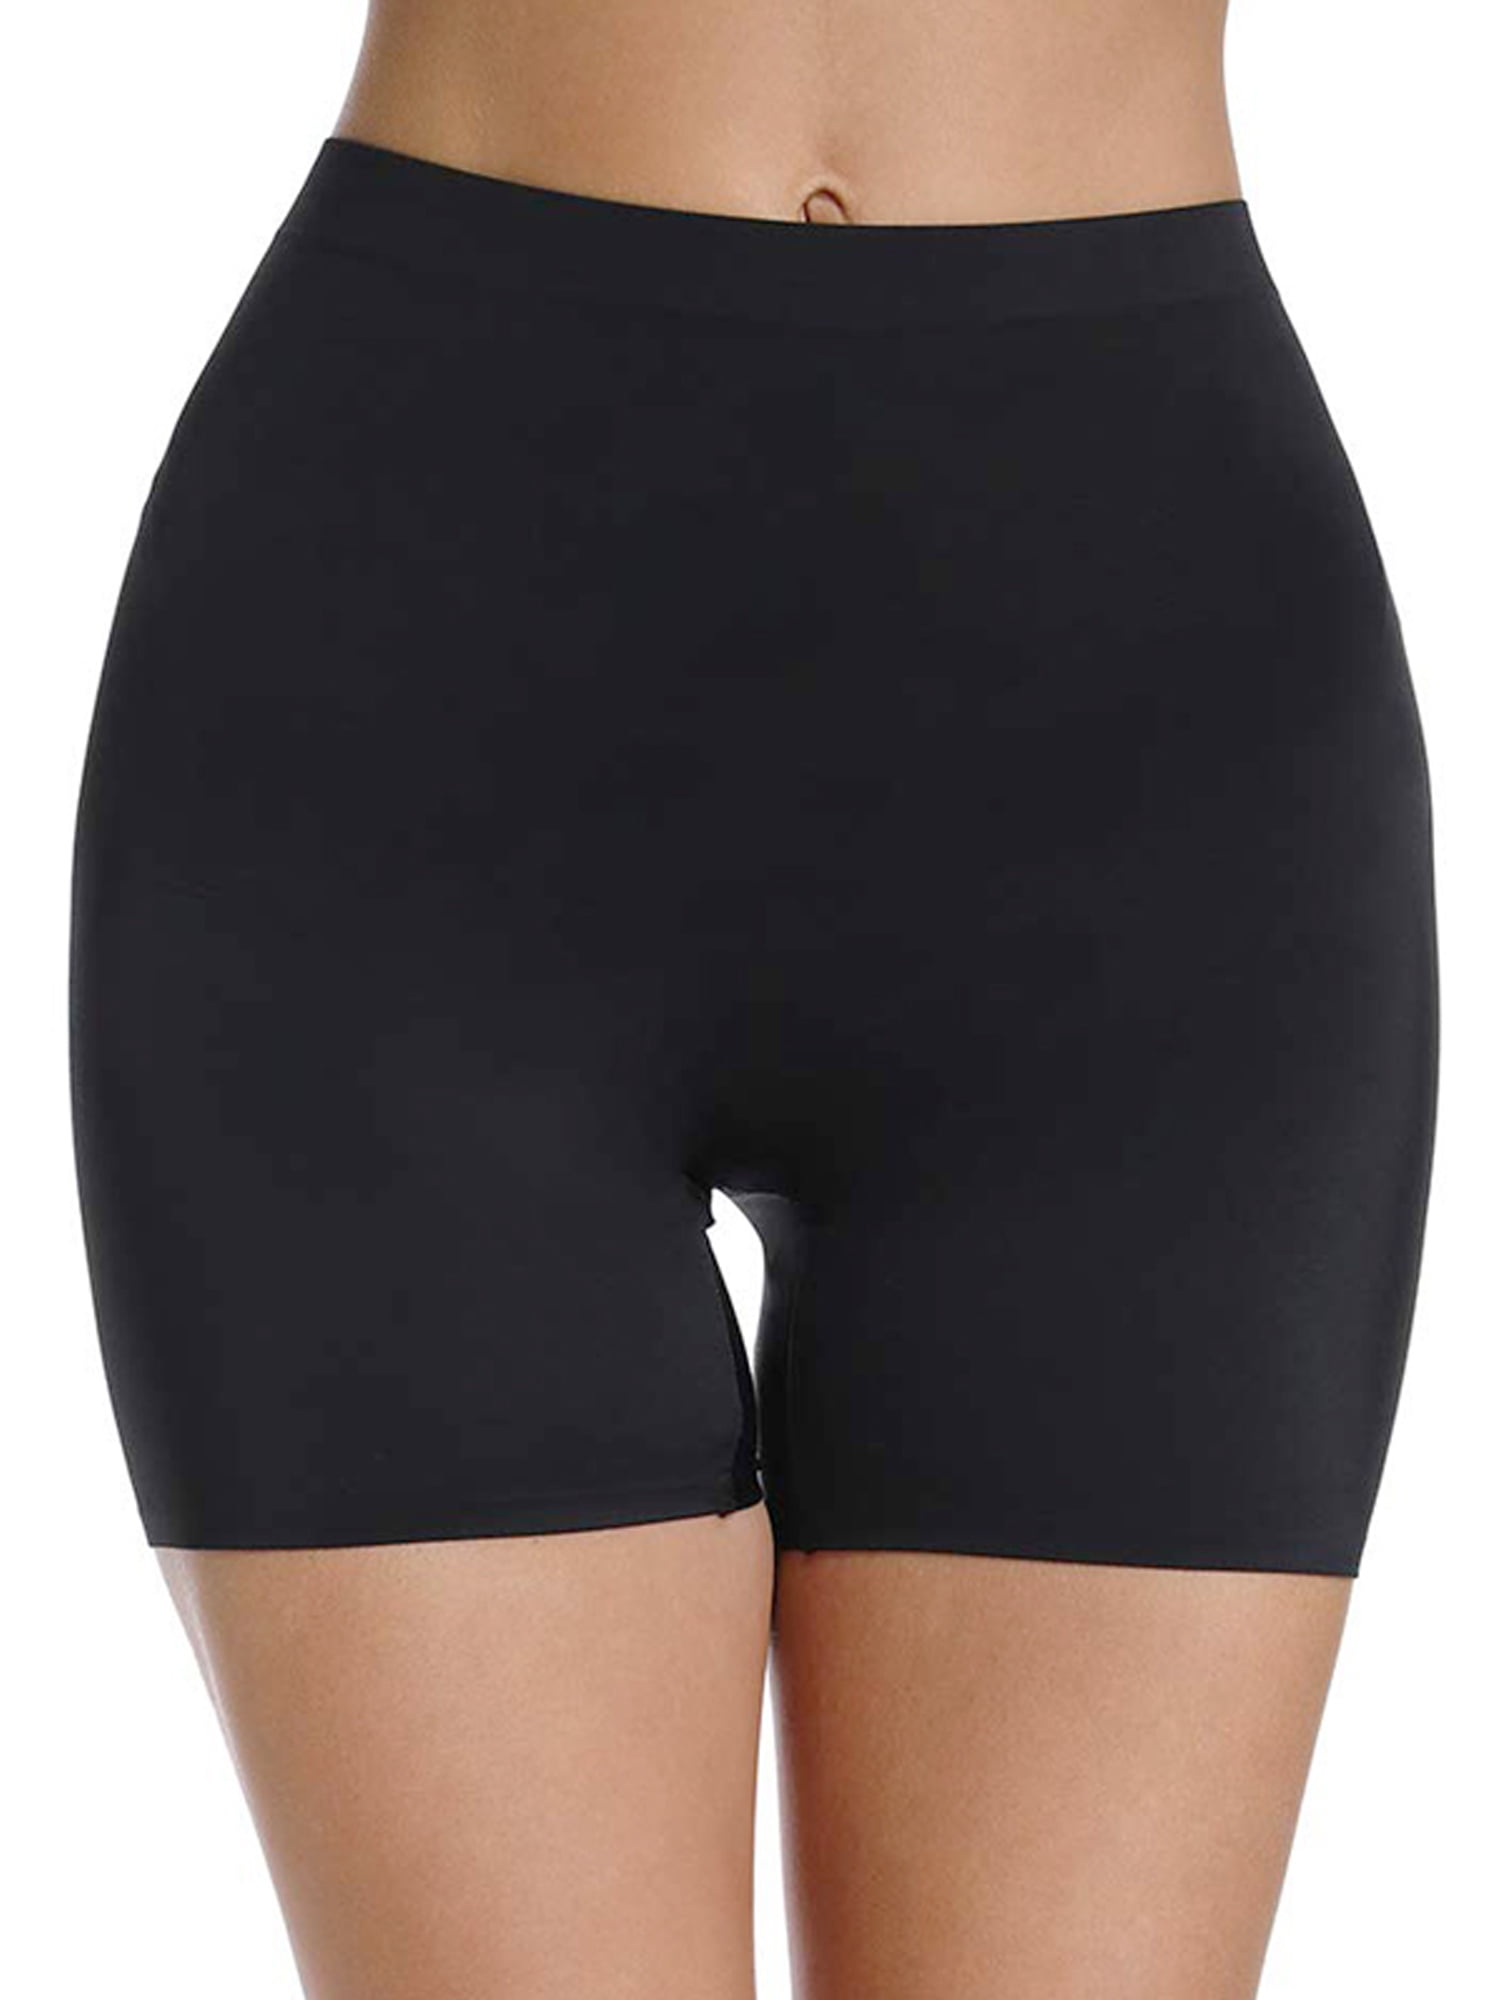 FITVALEN Seamless Shaping Boyshorts Panties for Women Tummy Control  Shapewear Under Dress Slip Shorts Underwear 